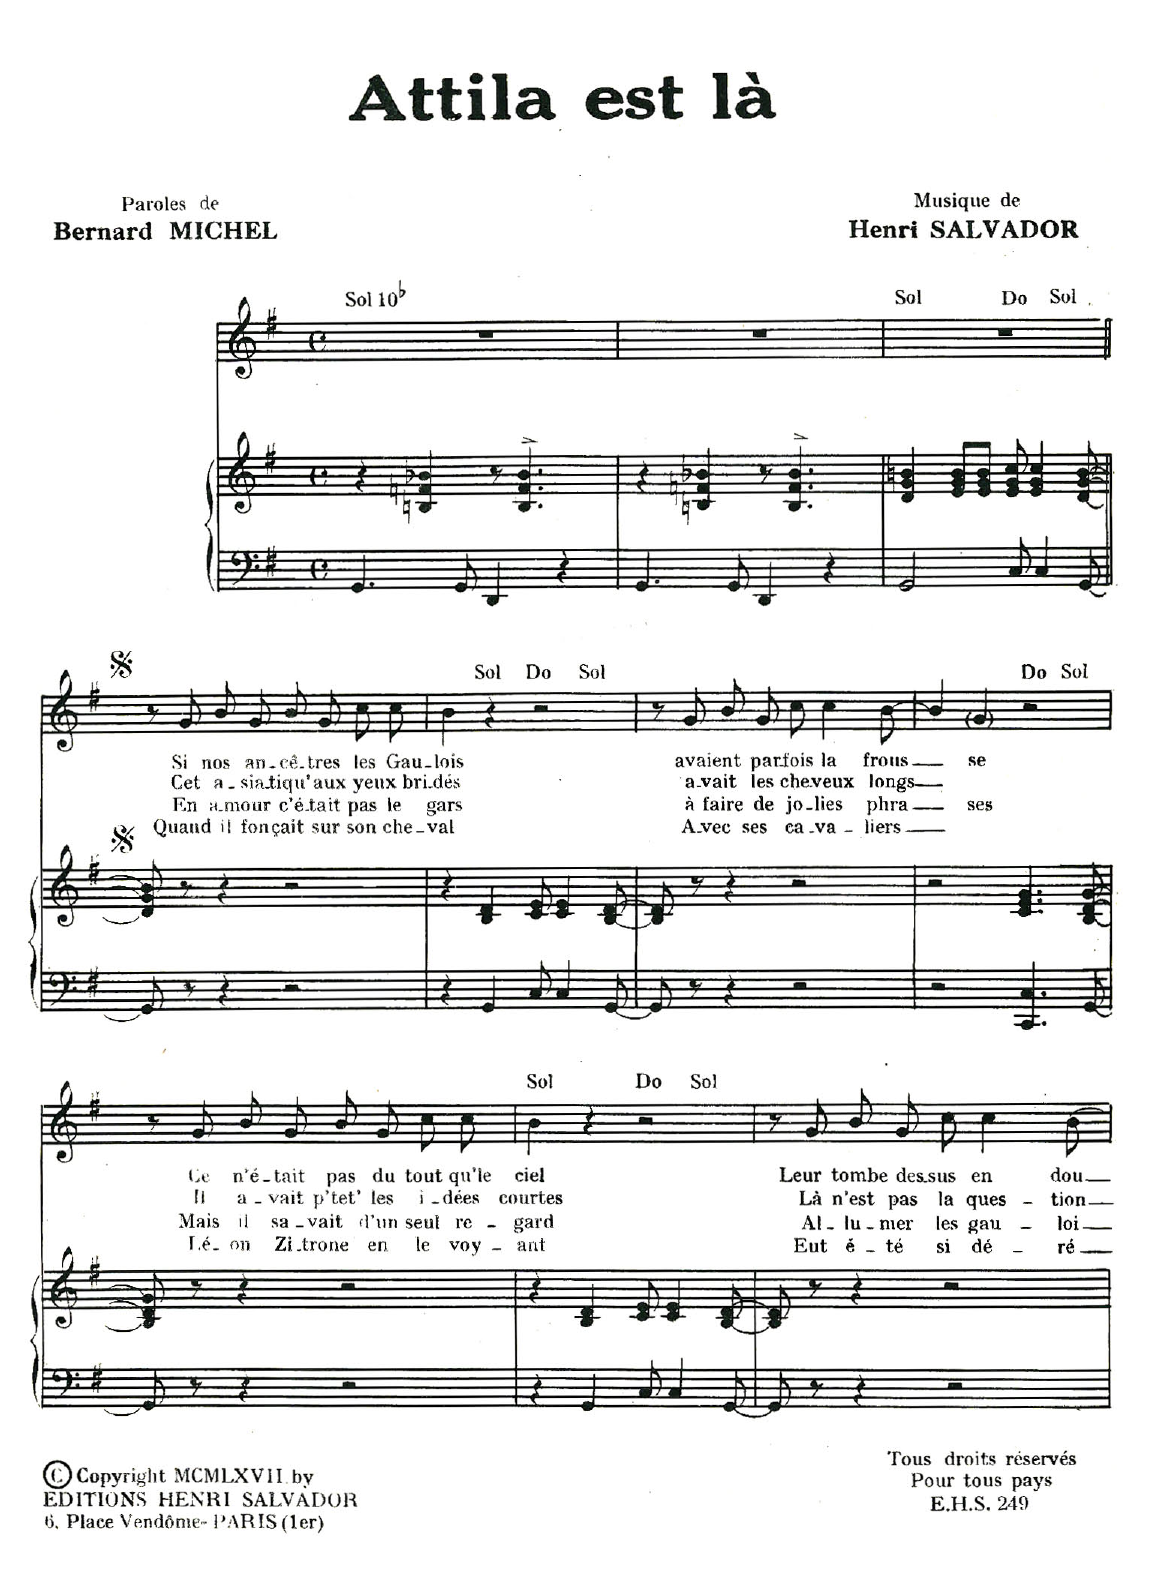 Henri Salvador Attila Est La Sheet Music Notes & Chords for Piano & Vocal - Download or Print PDF